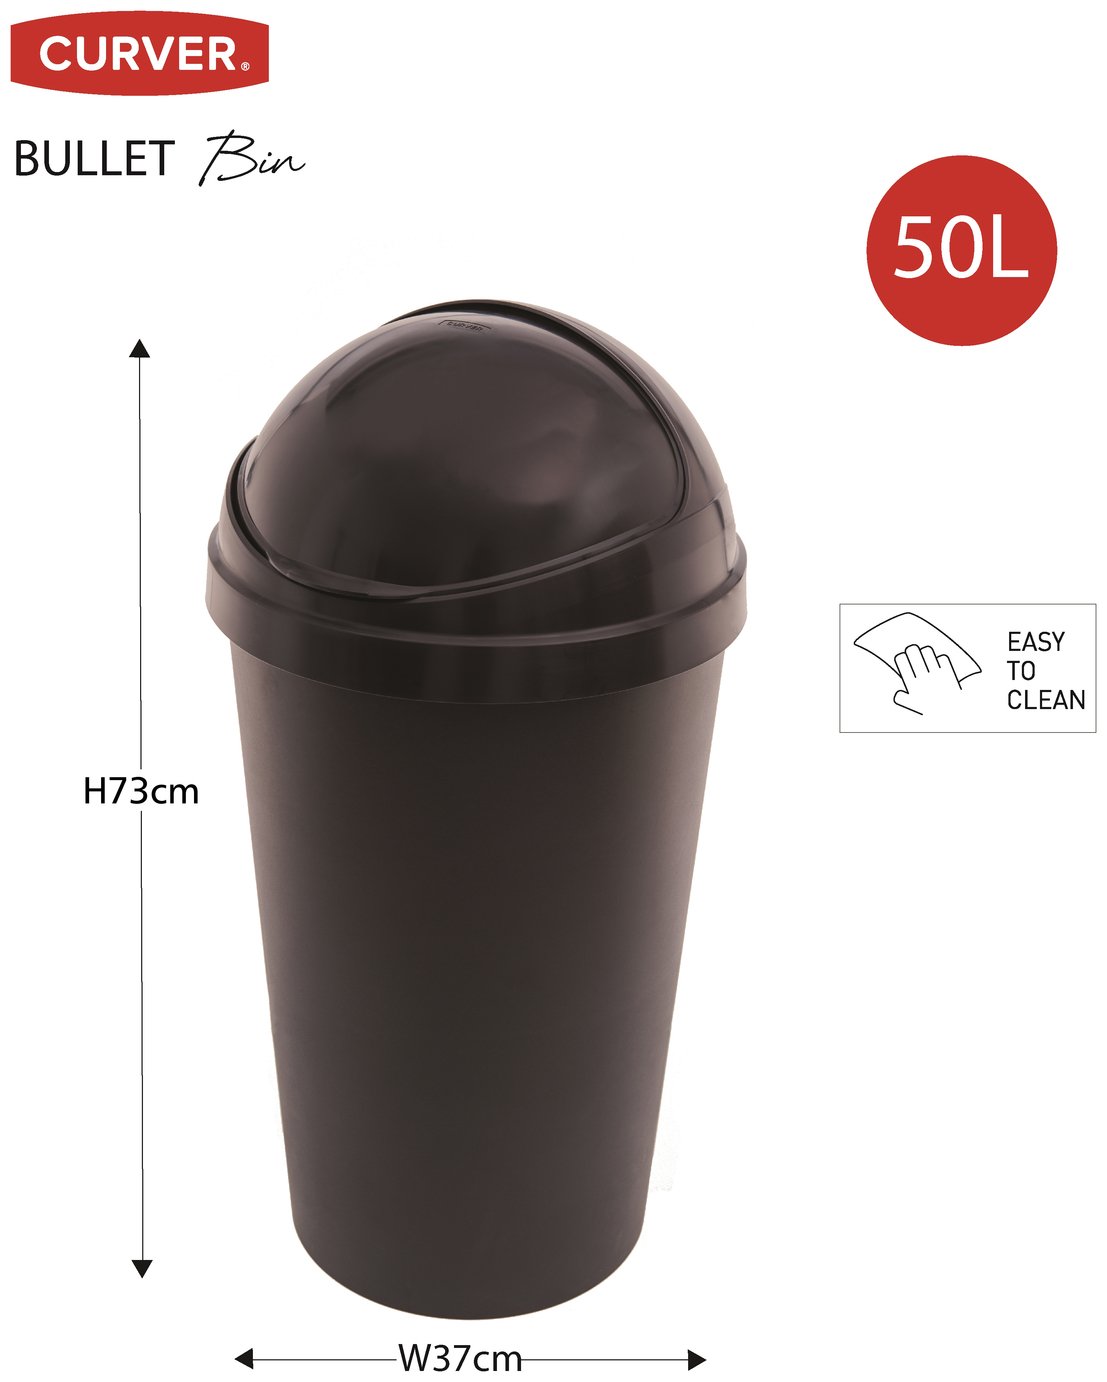 Argos Home Curver 50 Litre Bullet Kitchen Bin Review